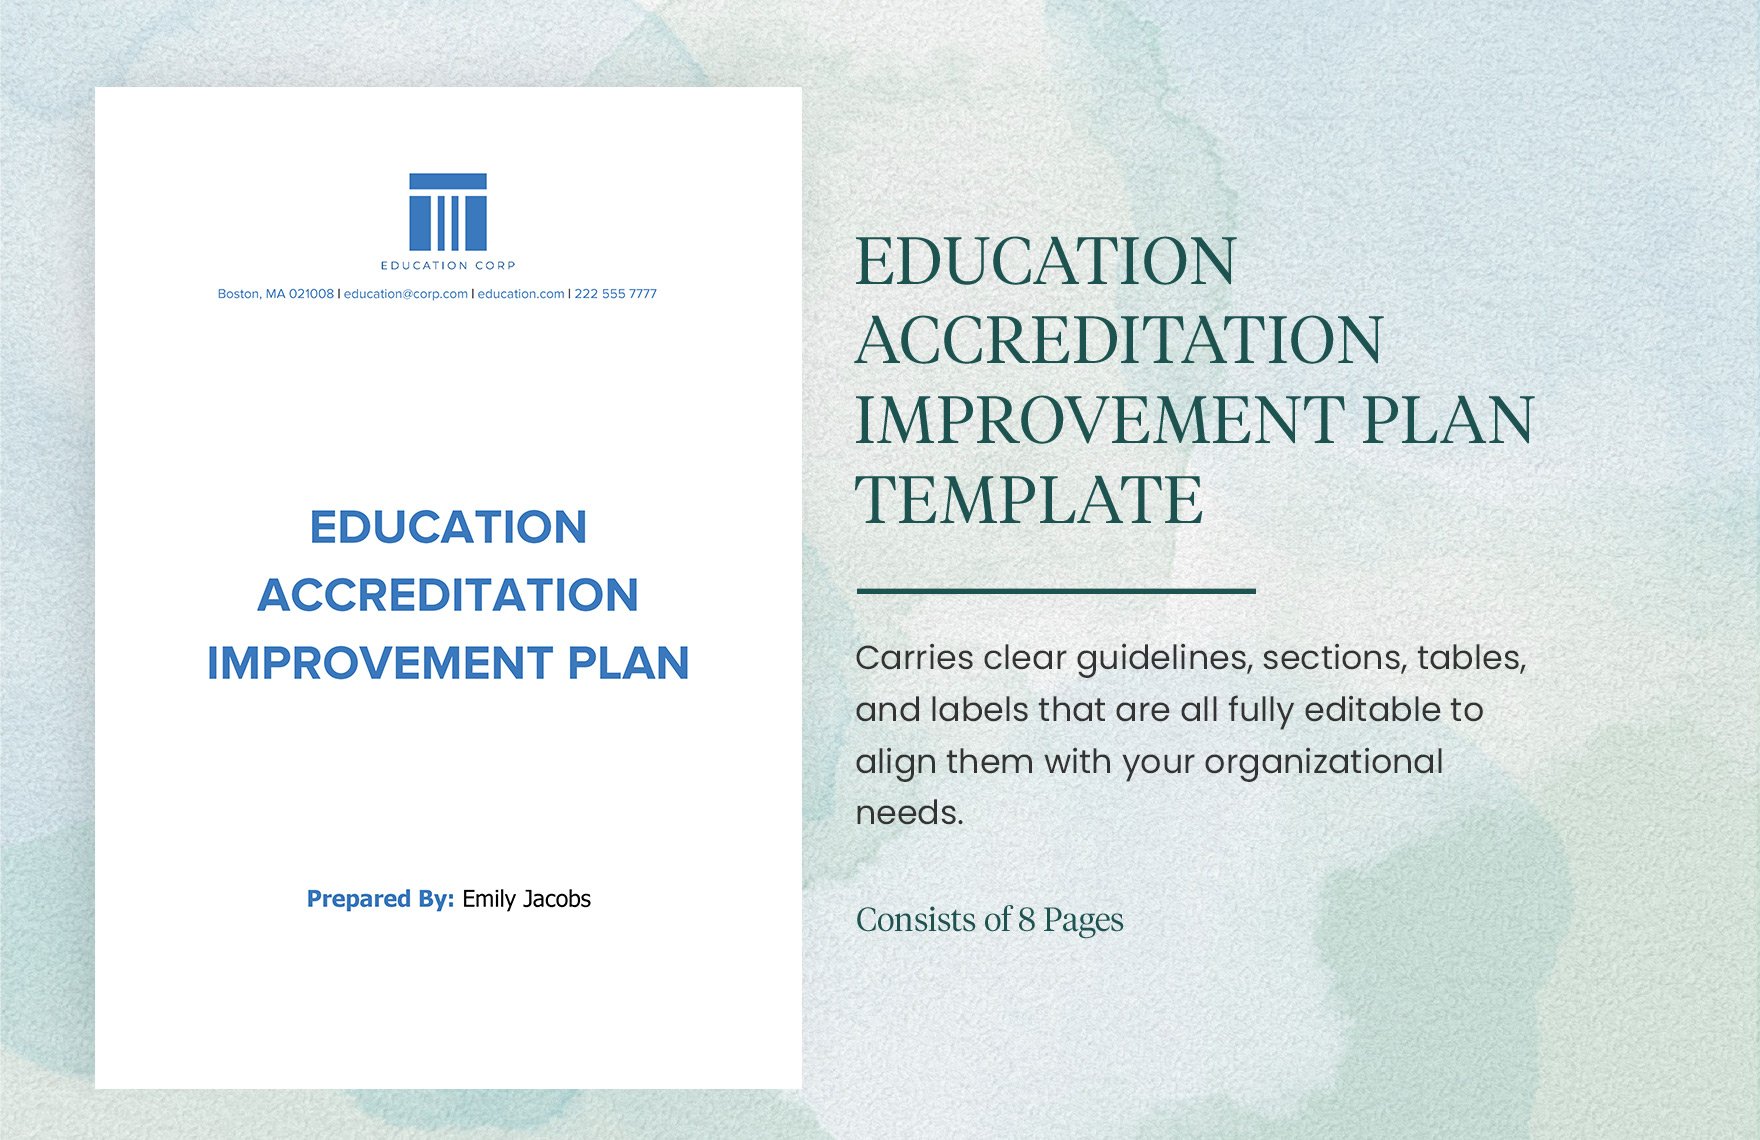 Education Accreditation Improvement Plan Template